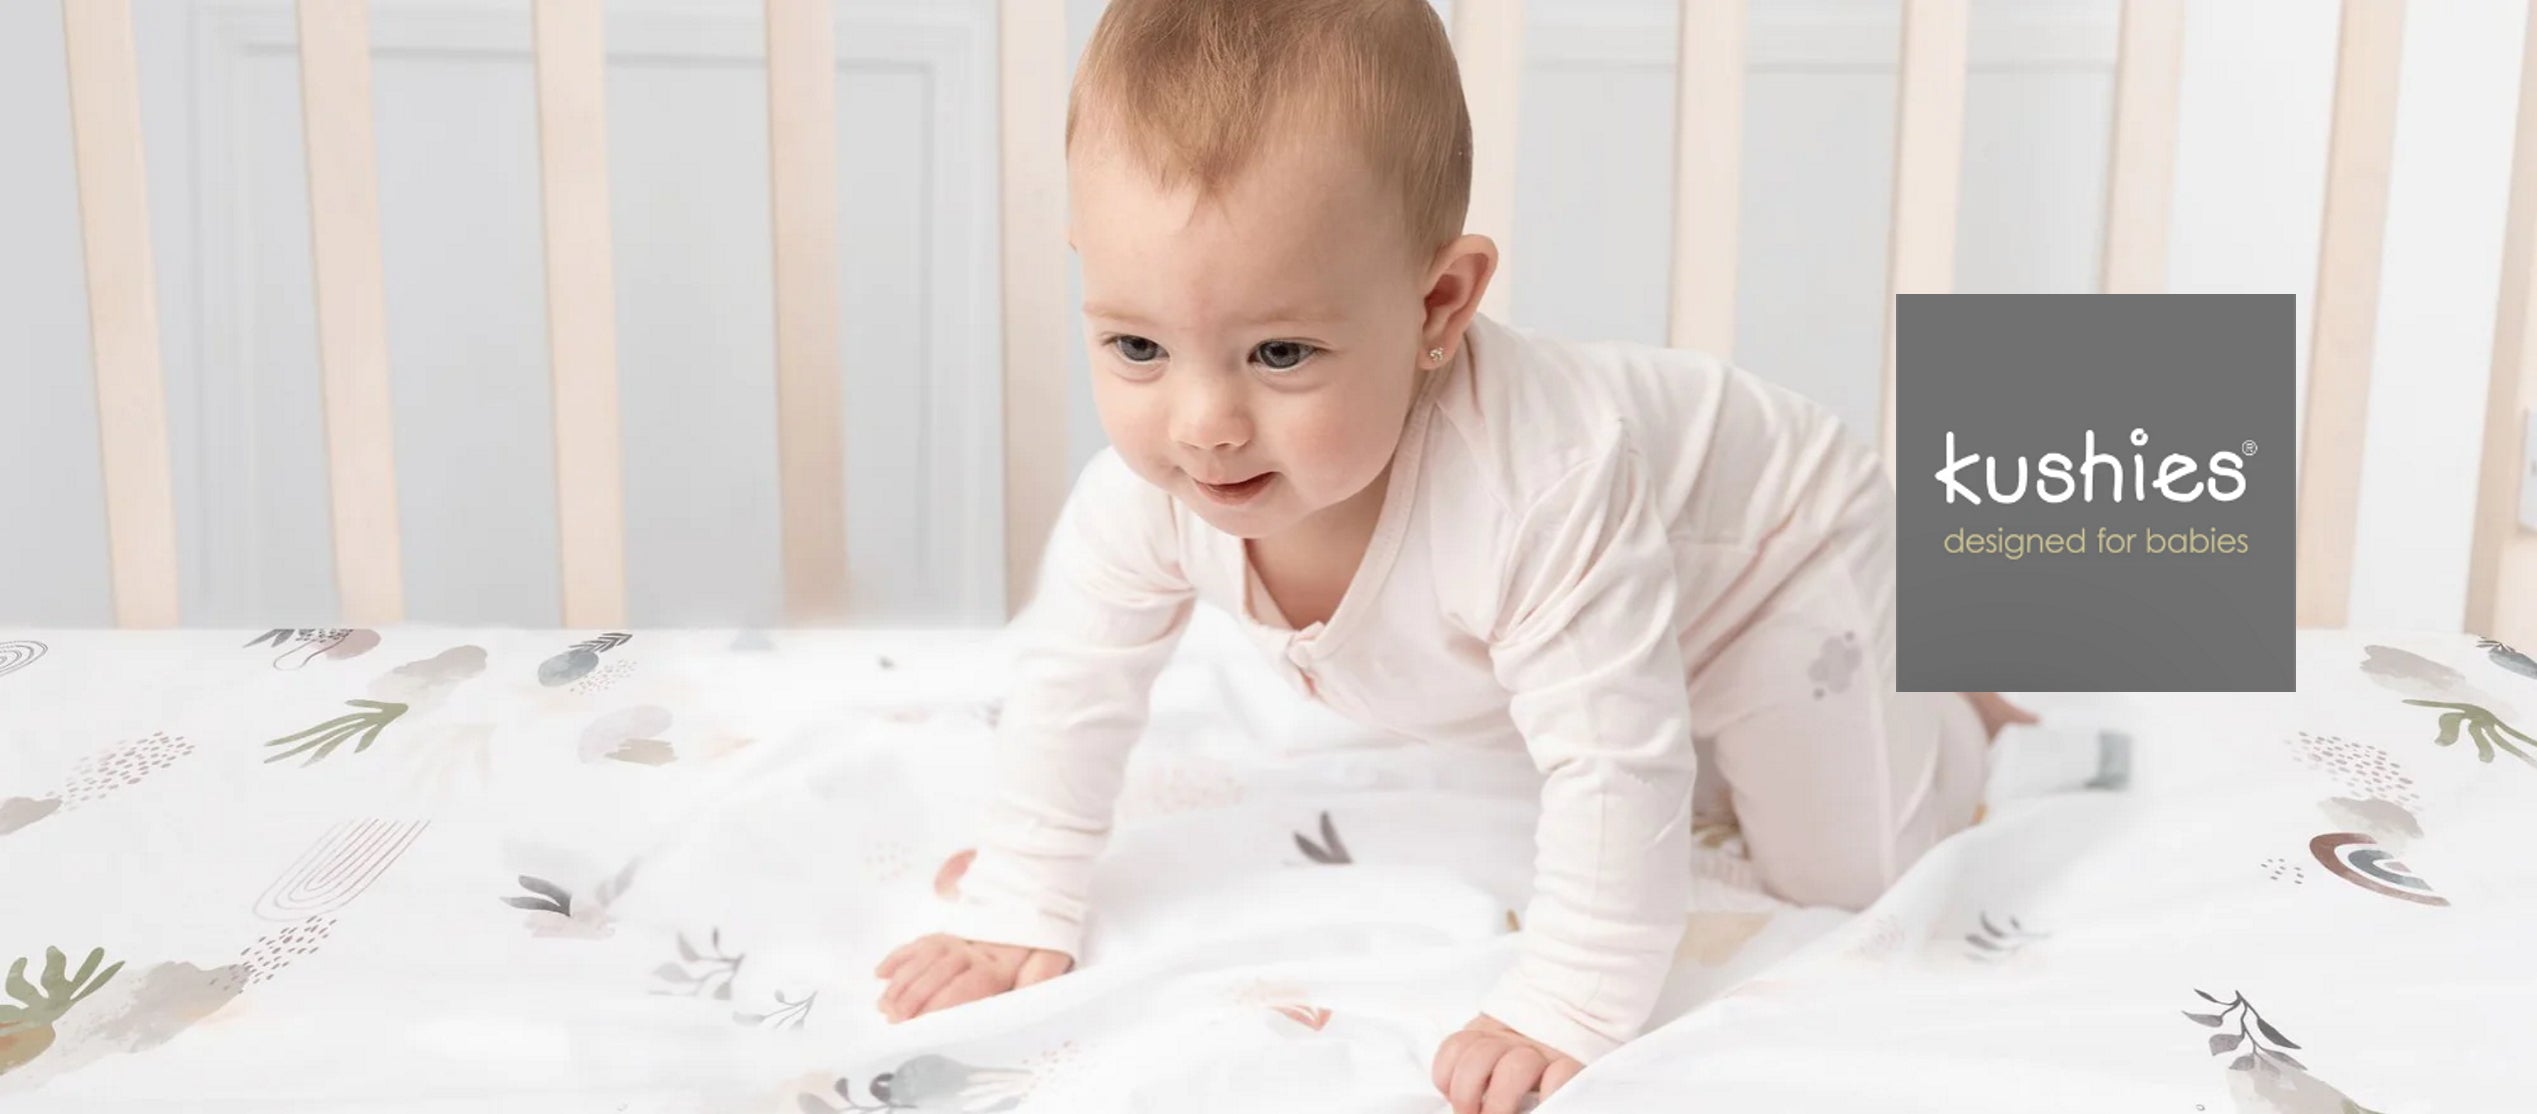 KUSHIES 嚴選來自加拿大的高品質，適合寶寶不同階段需要的嬰奶兒產品